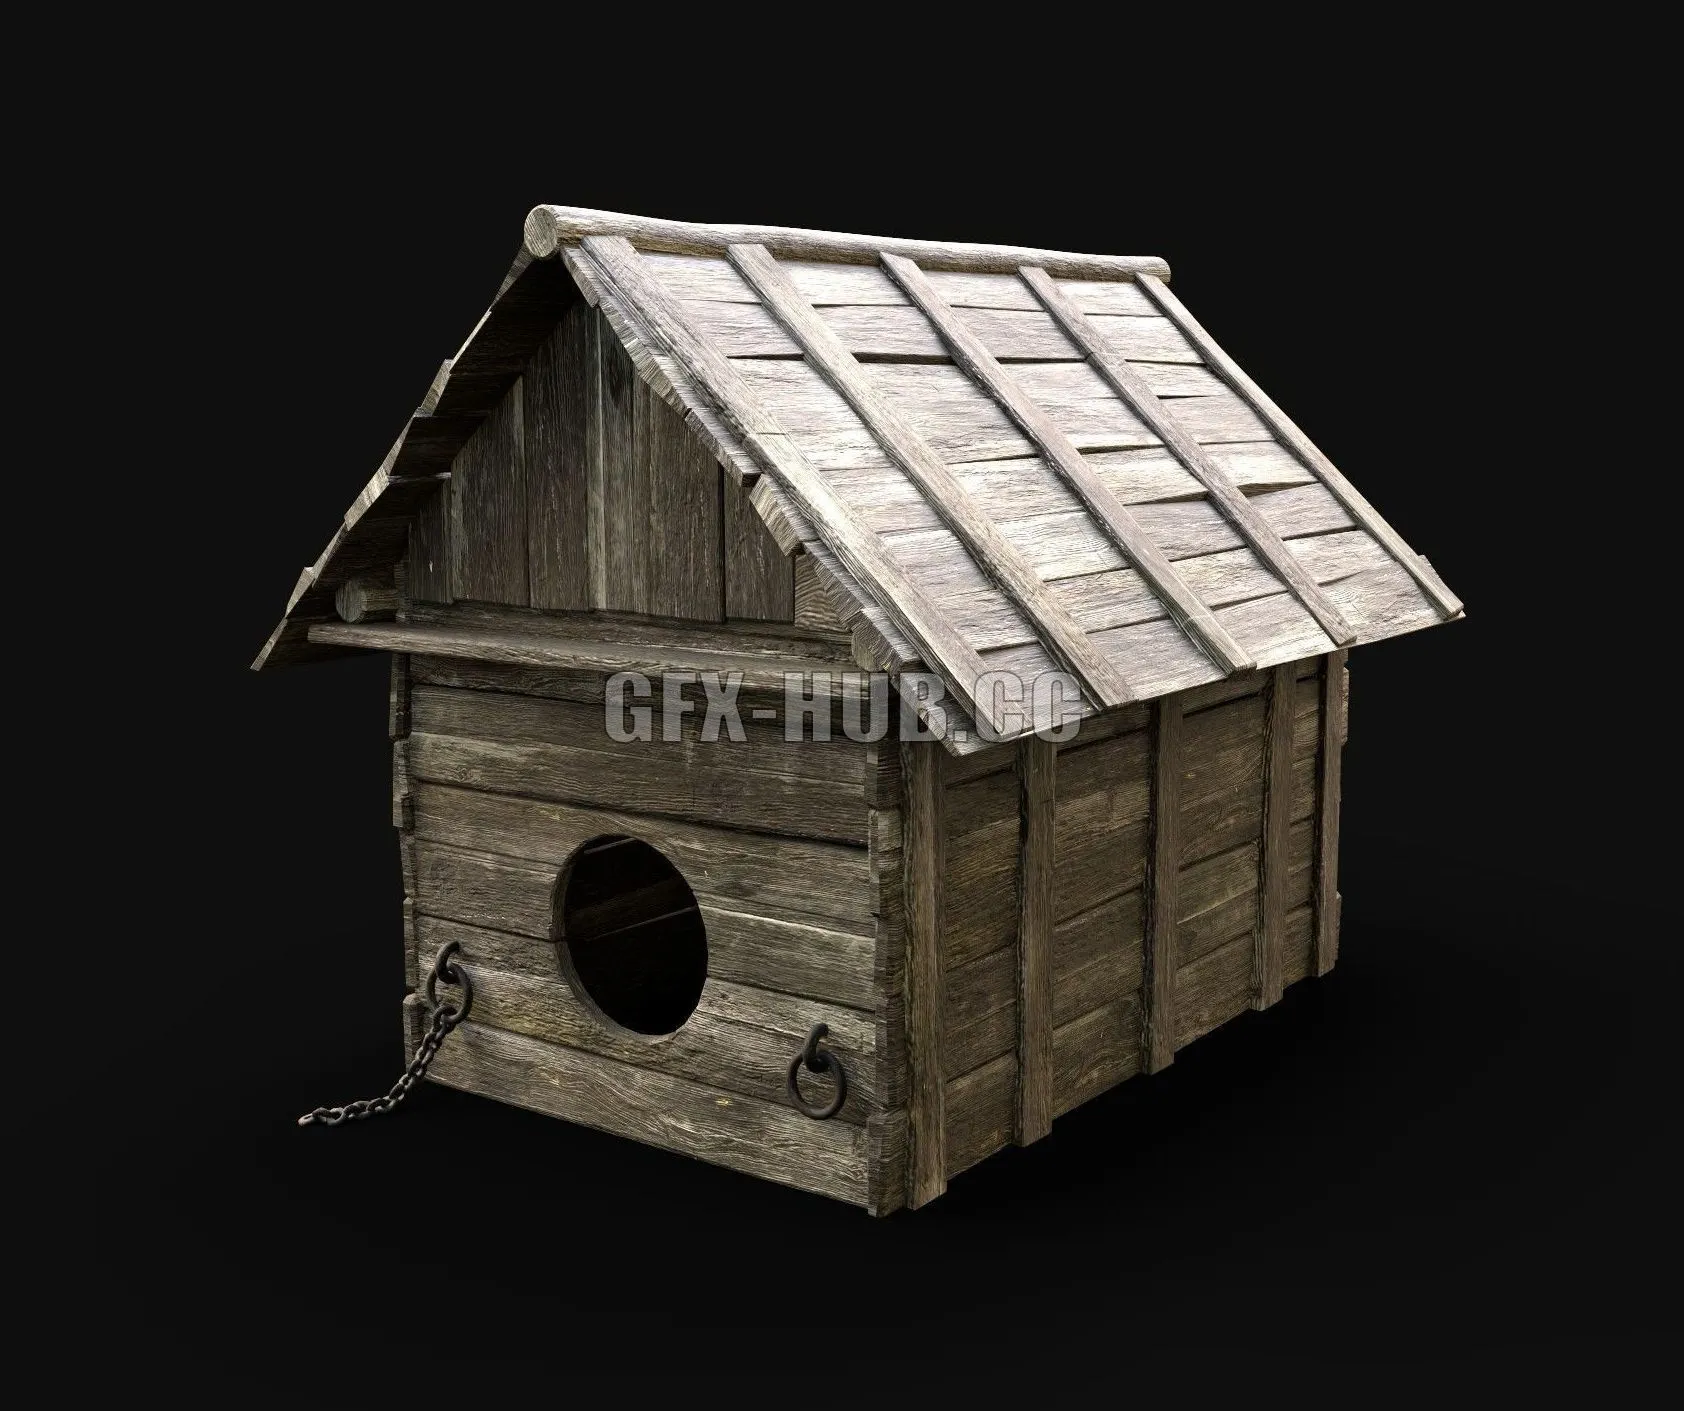 PBR Game 3D Model – FARM DOG HOUSE HOUND VILLAGE COTTAGE SHEPHERD ANIMAL HUT